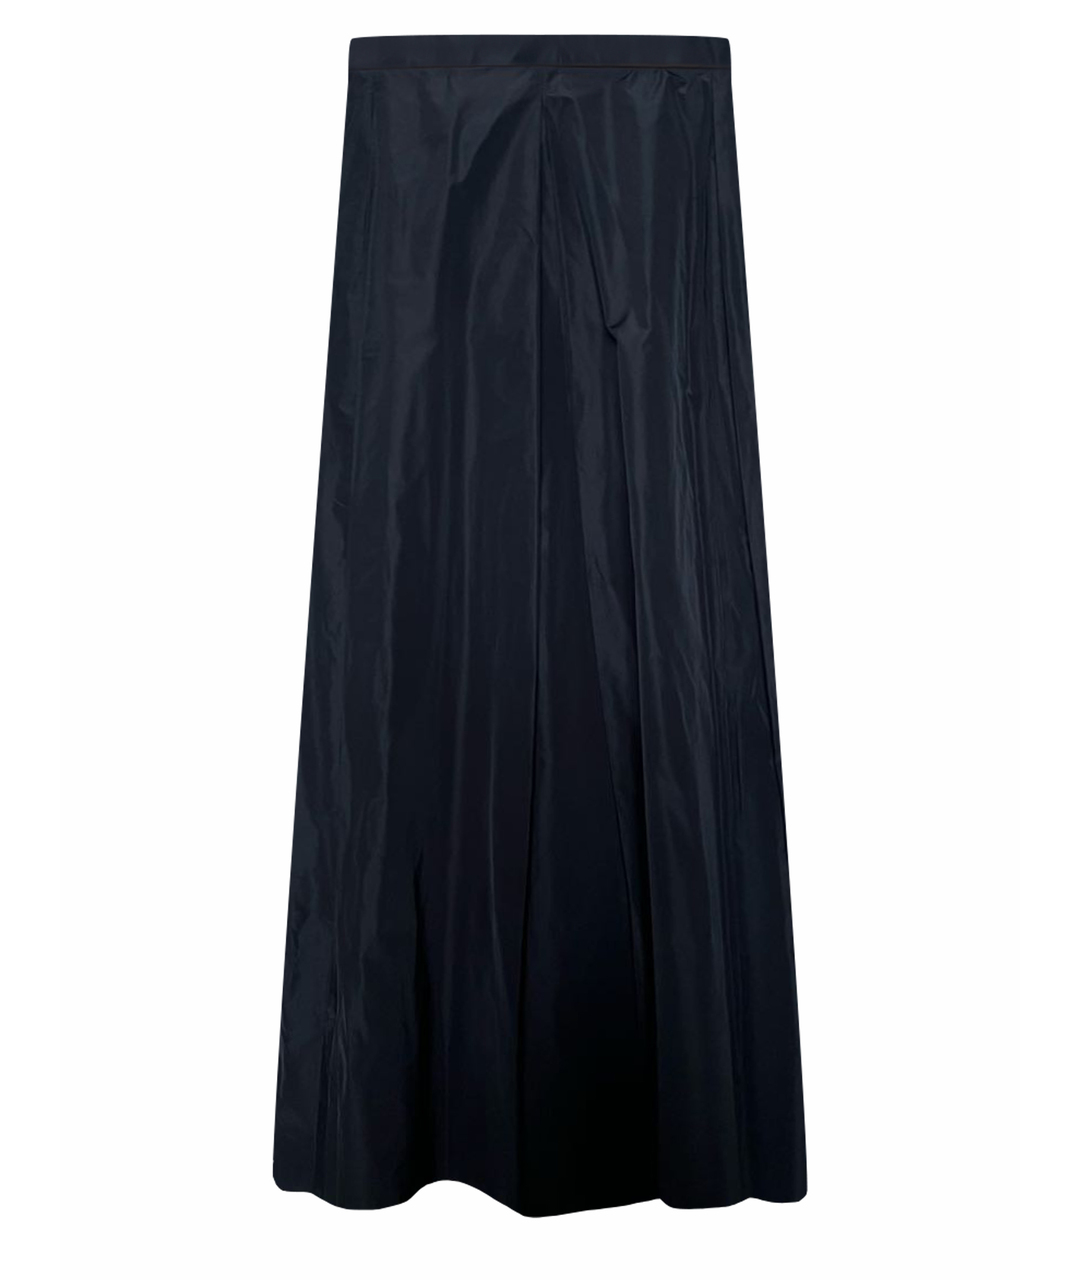 'S MAX MARA Темно-синяя полиэстеровая юбка макси, фото 1